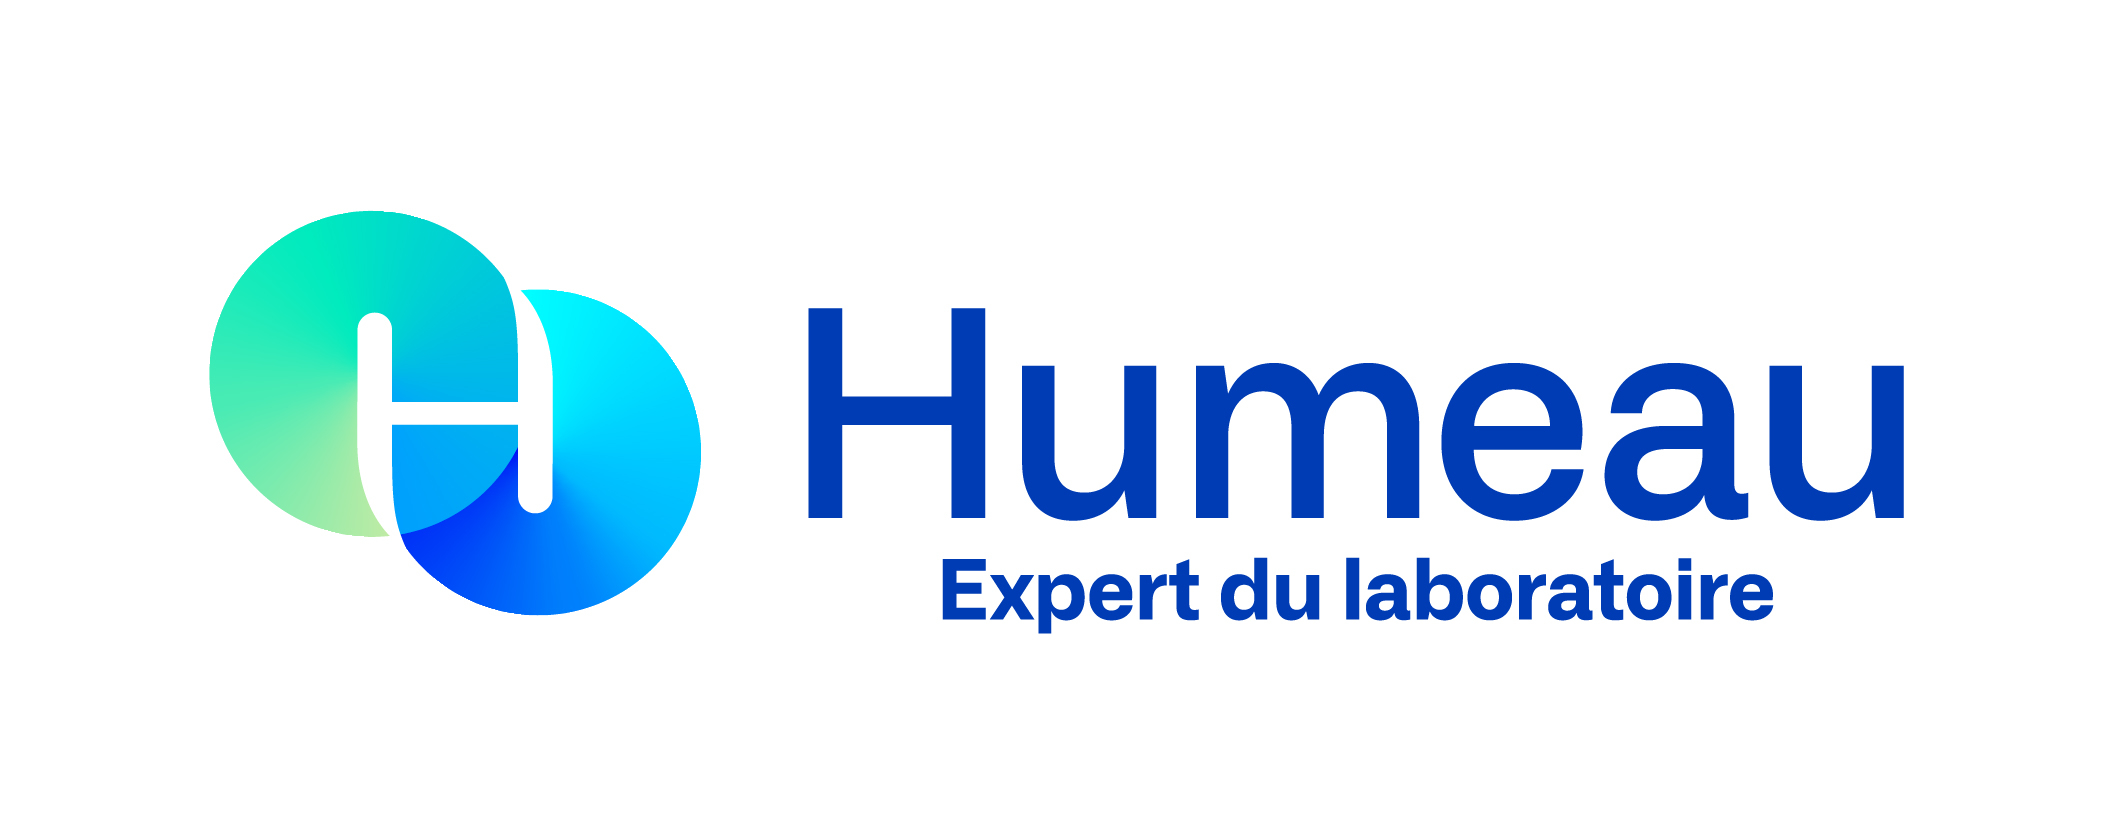 Logo LABORATOIRES HUMEAU